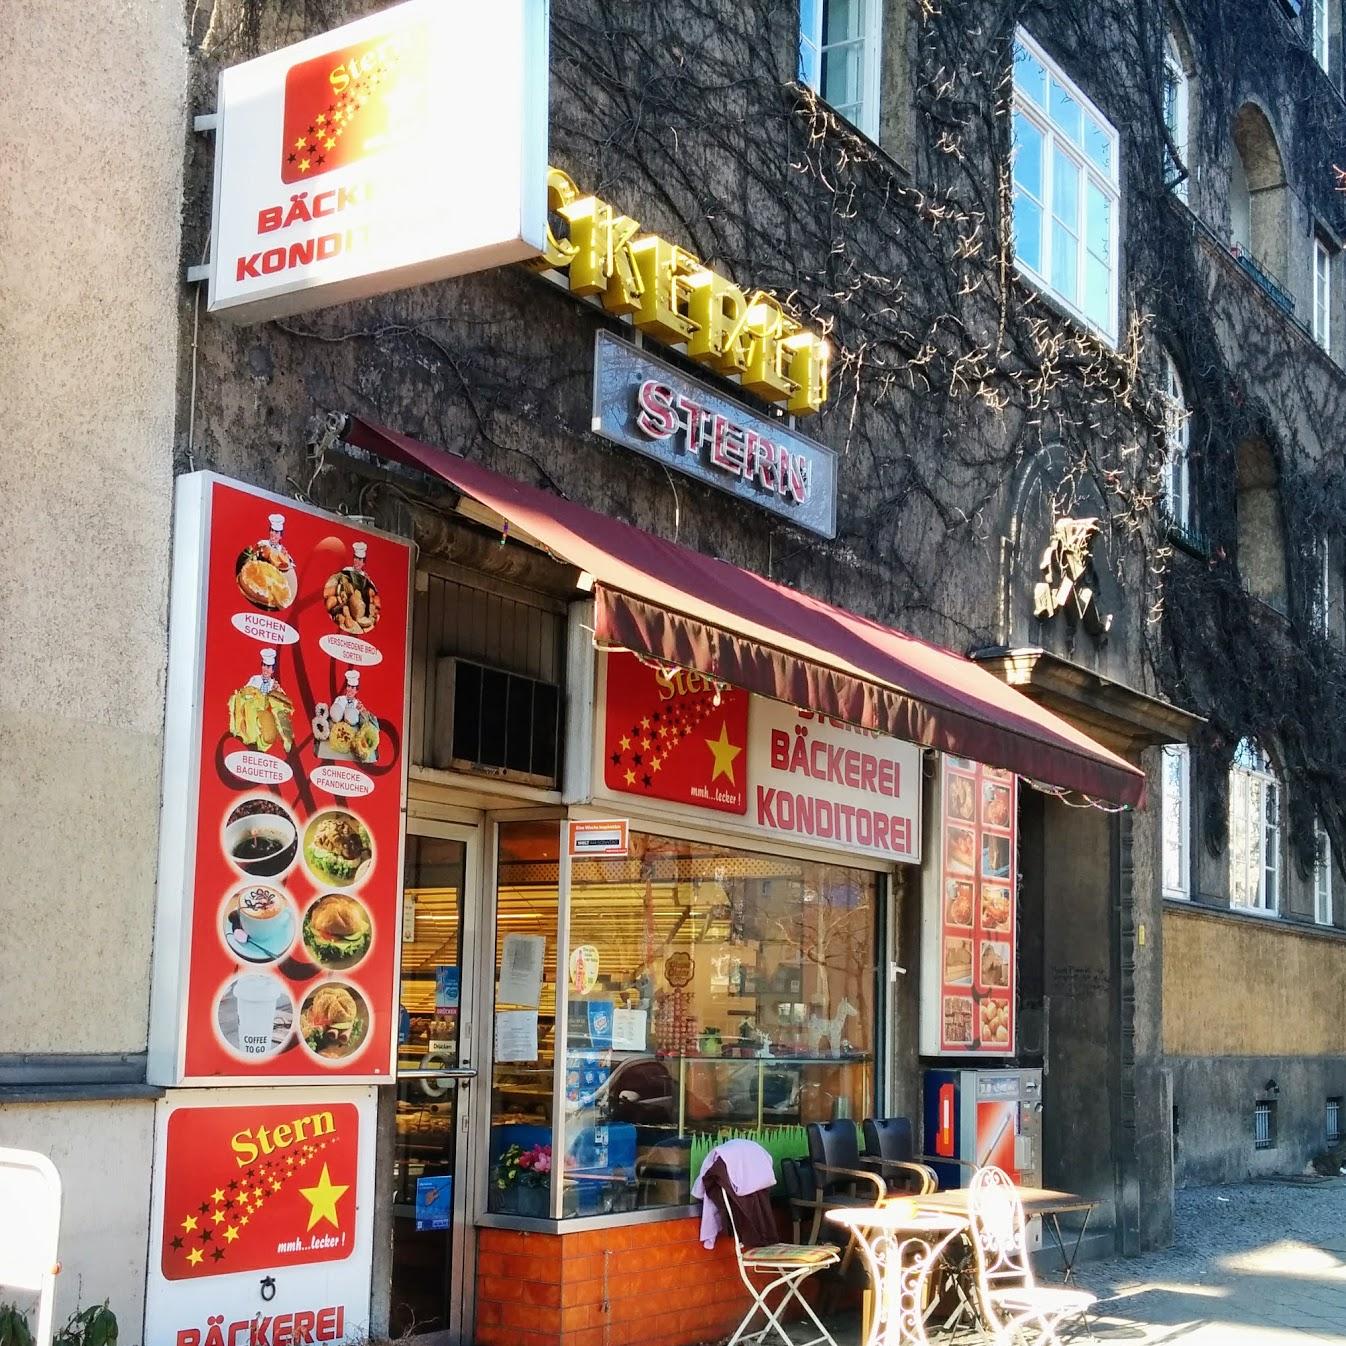 Restaurant "Bäckerei Stern" in Berlin